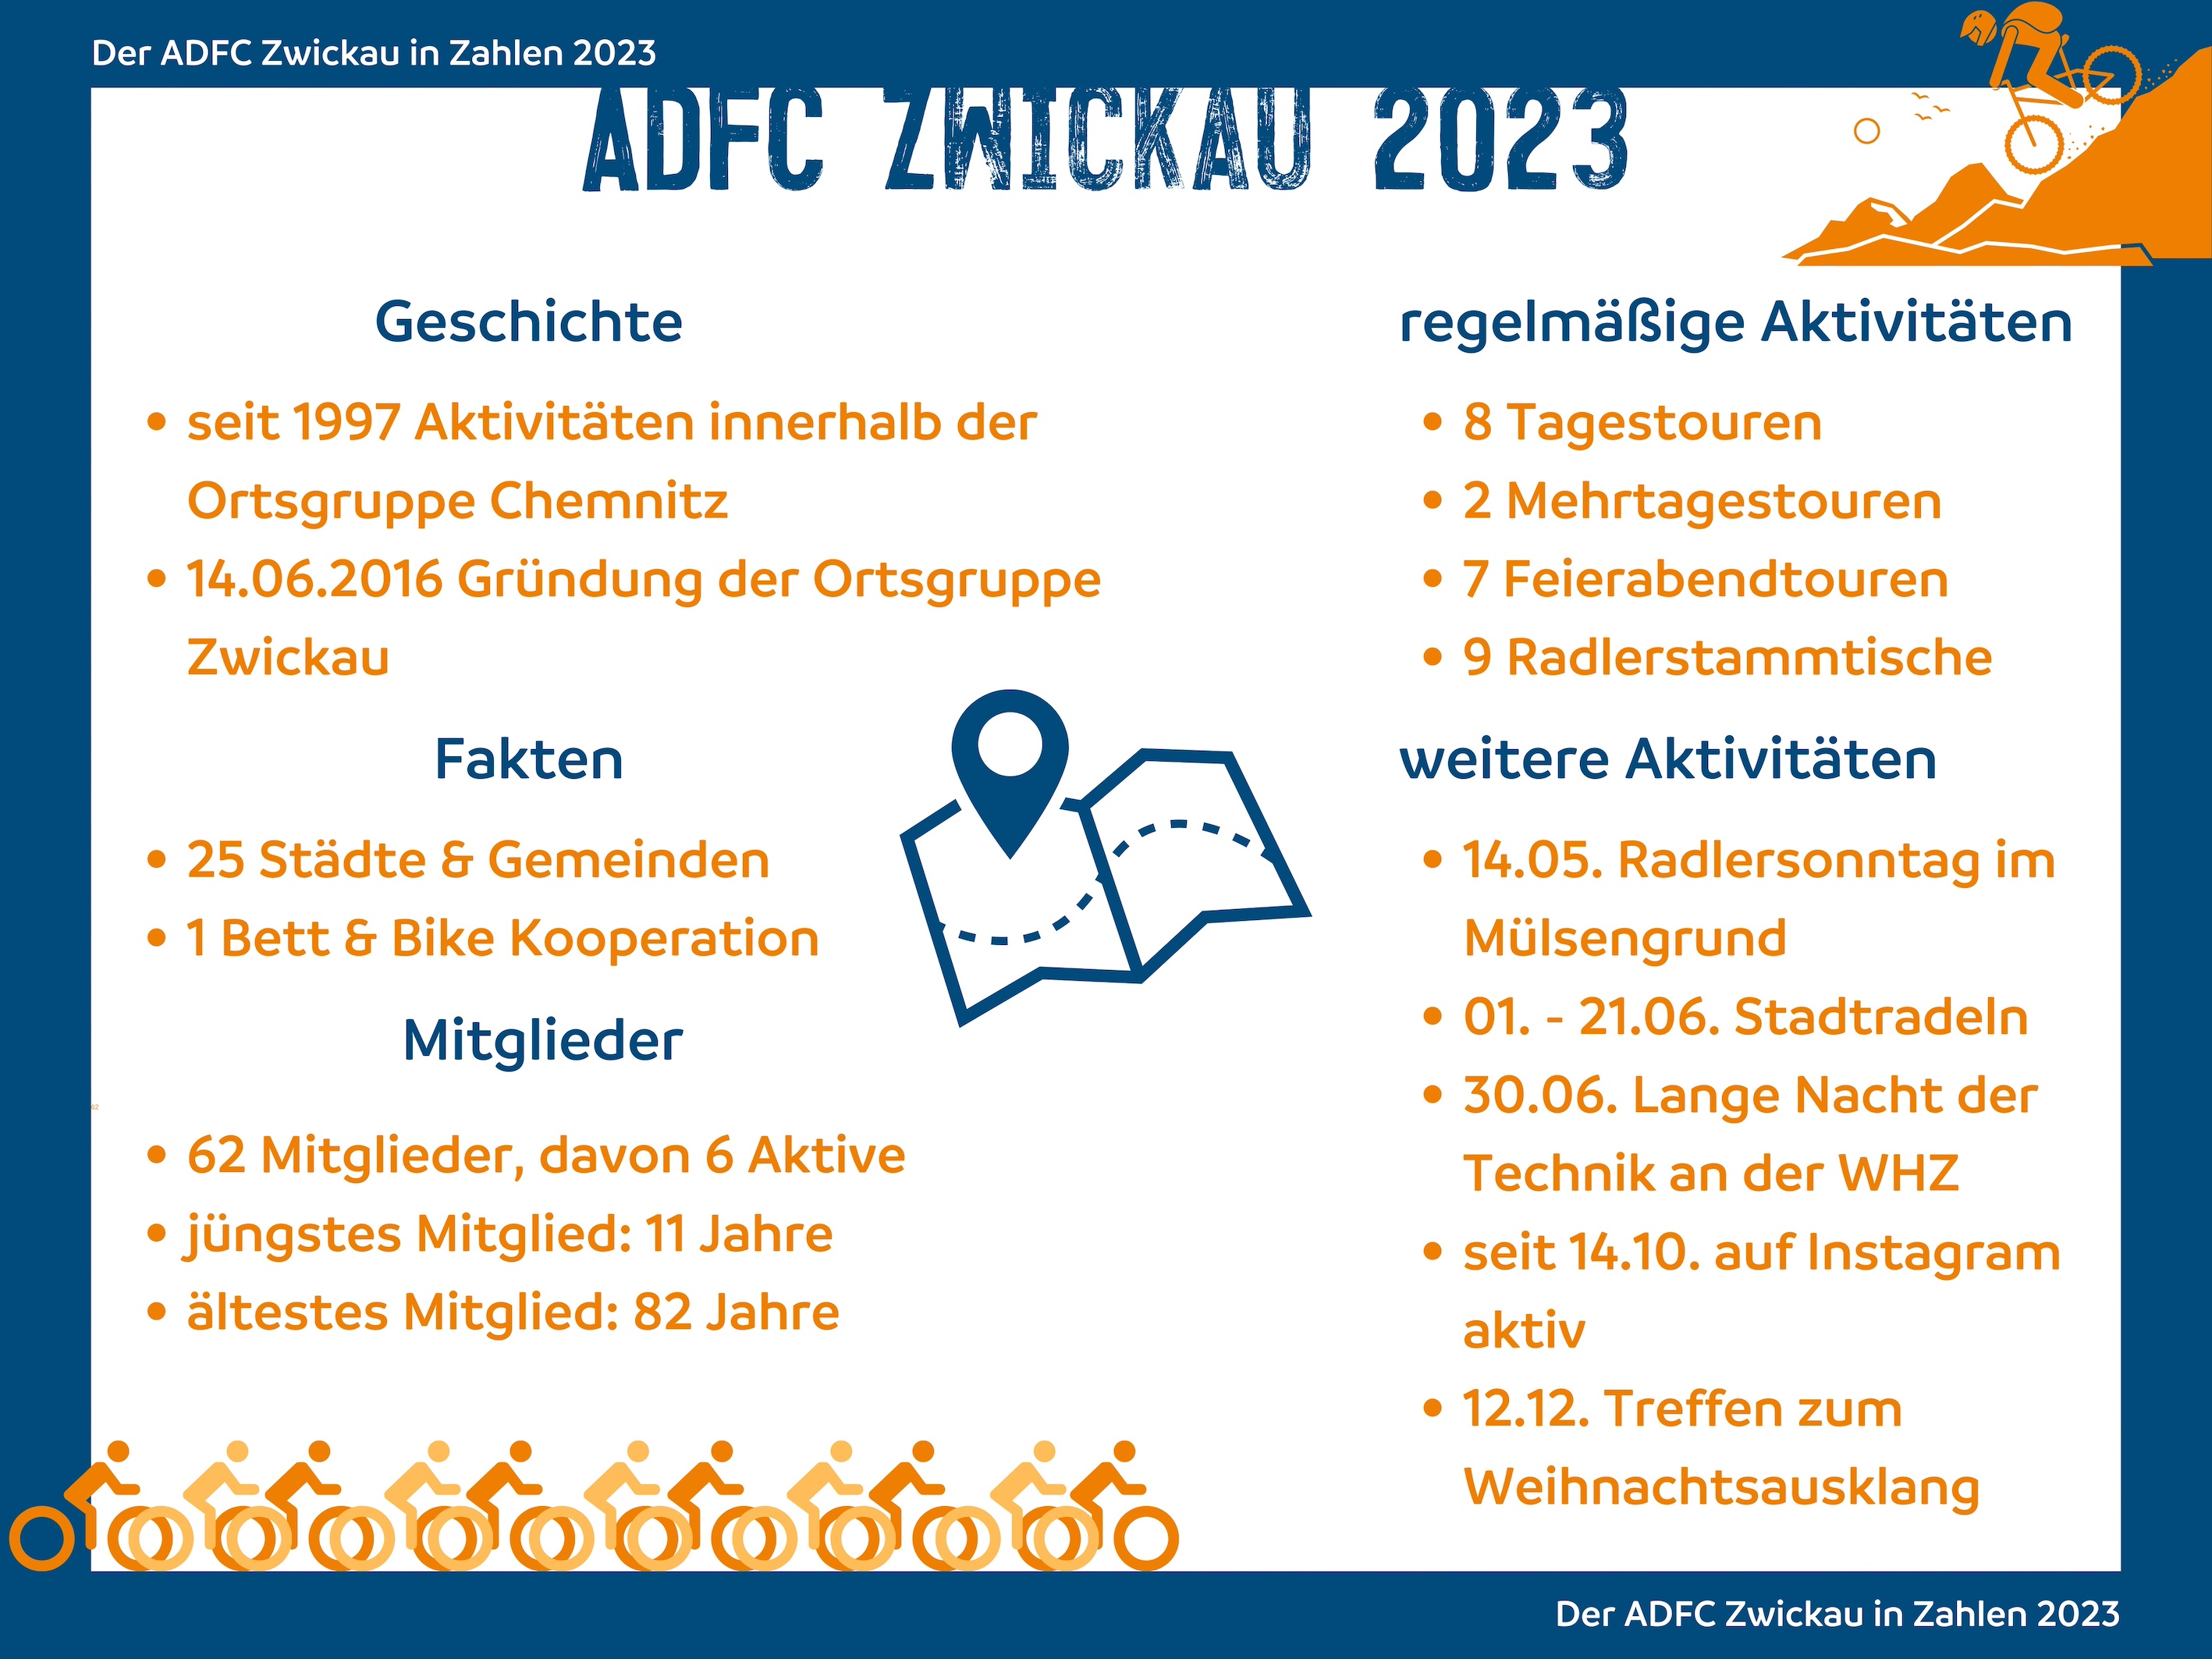 ADFC Zwickau in Zahlen 2023